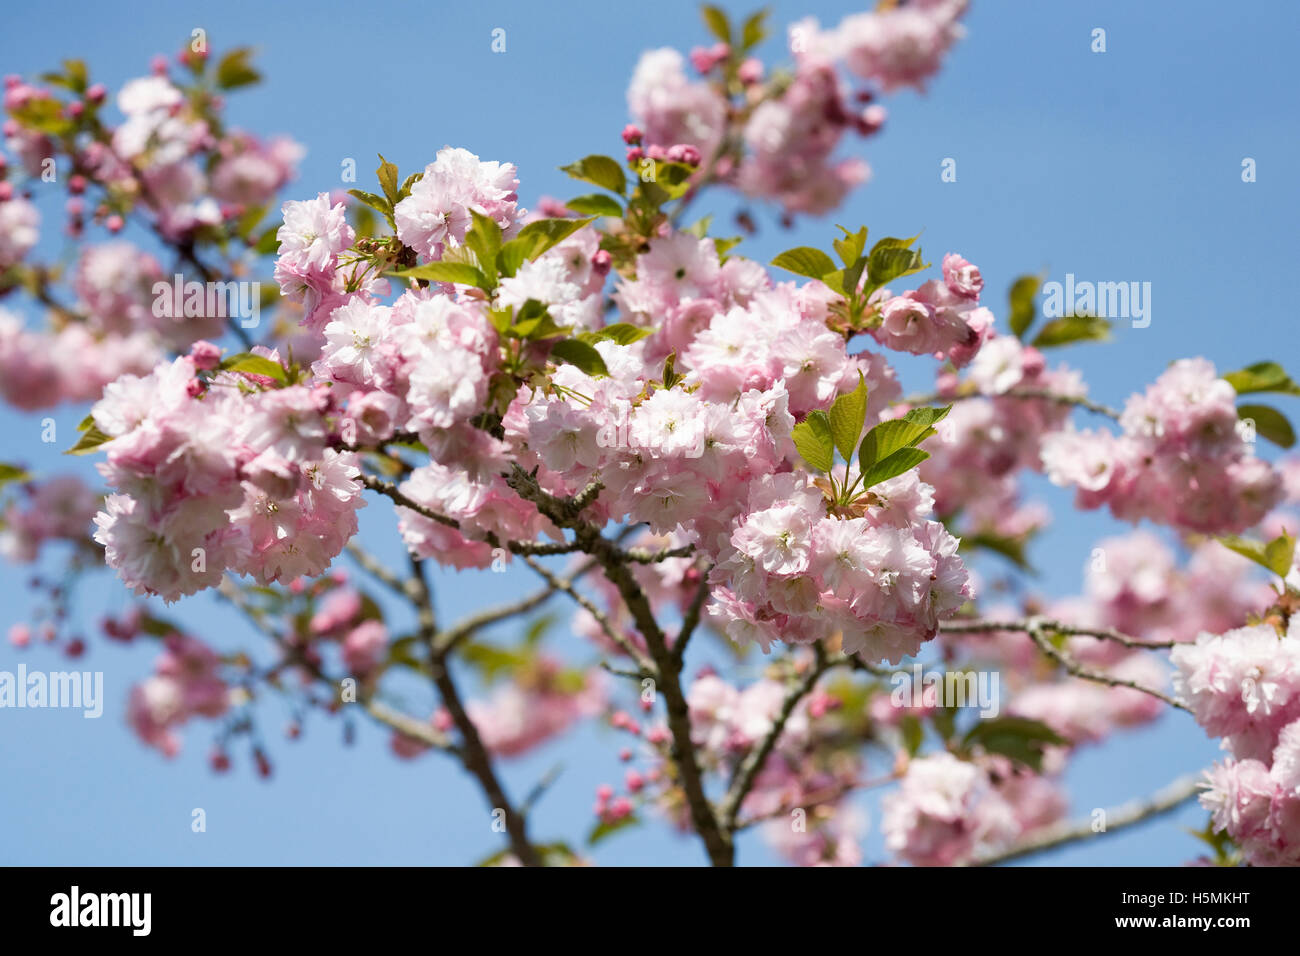 Prunus. Japanese cherry tree blossom. Cherry blossom in an English garden. Stock Photo